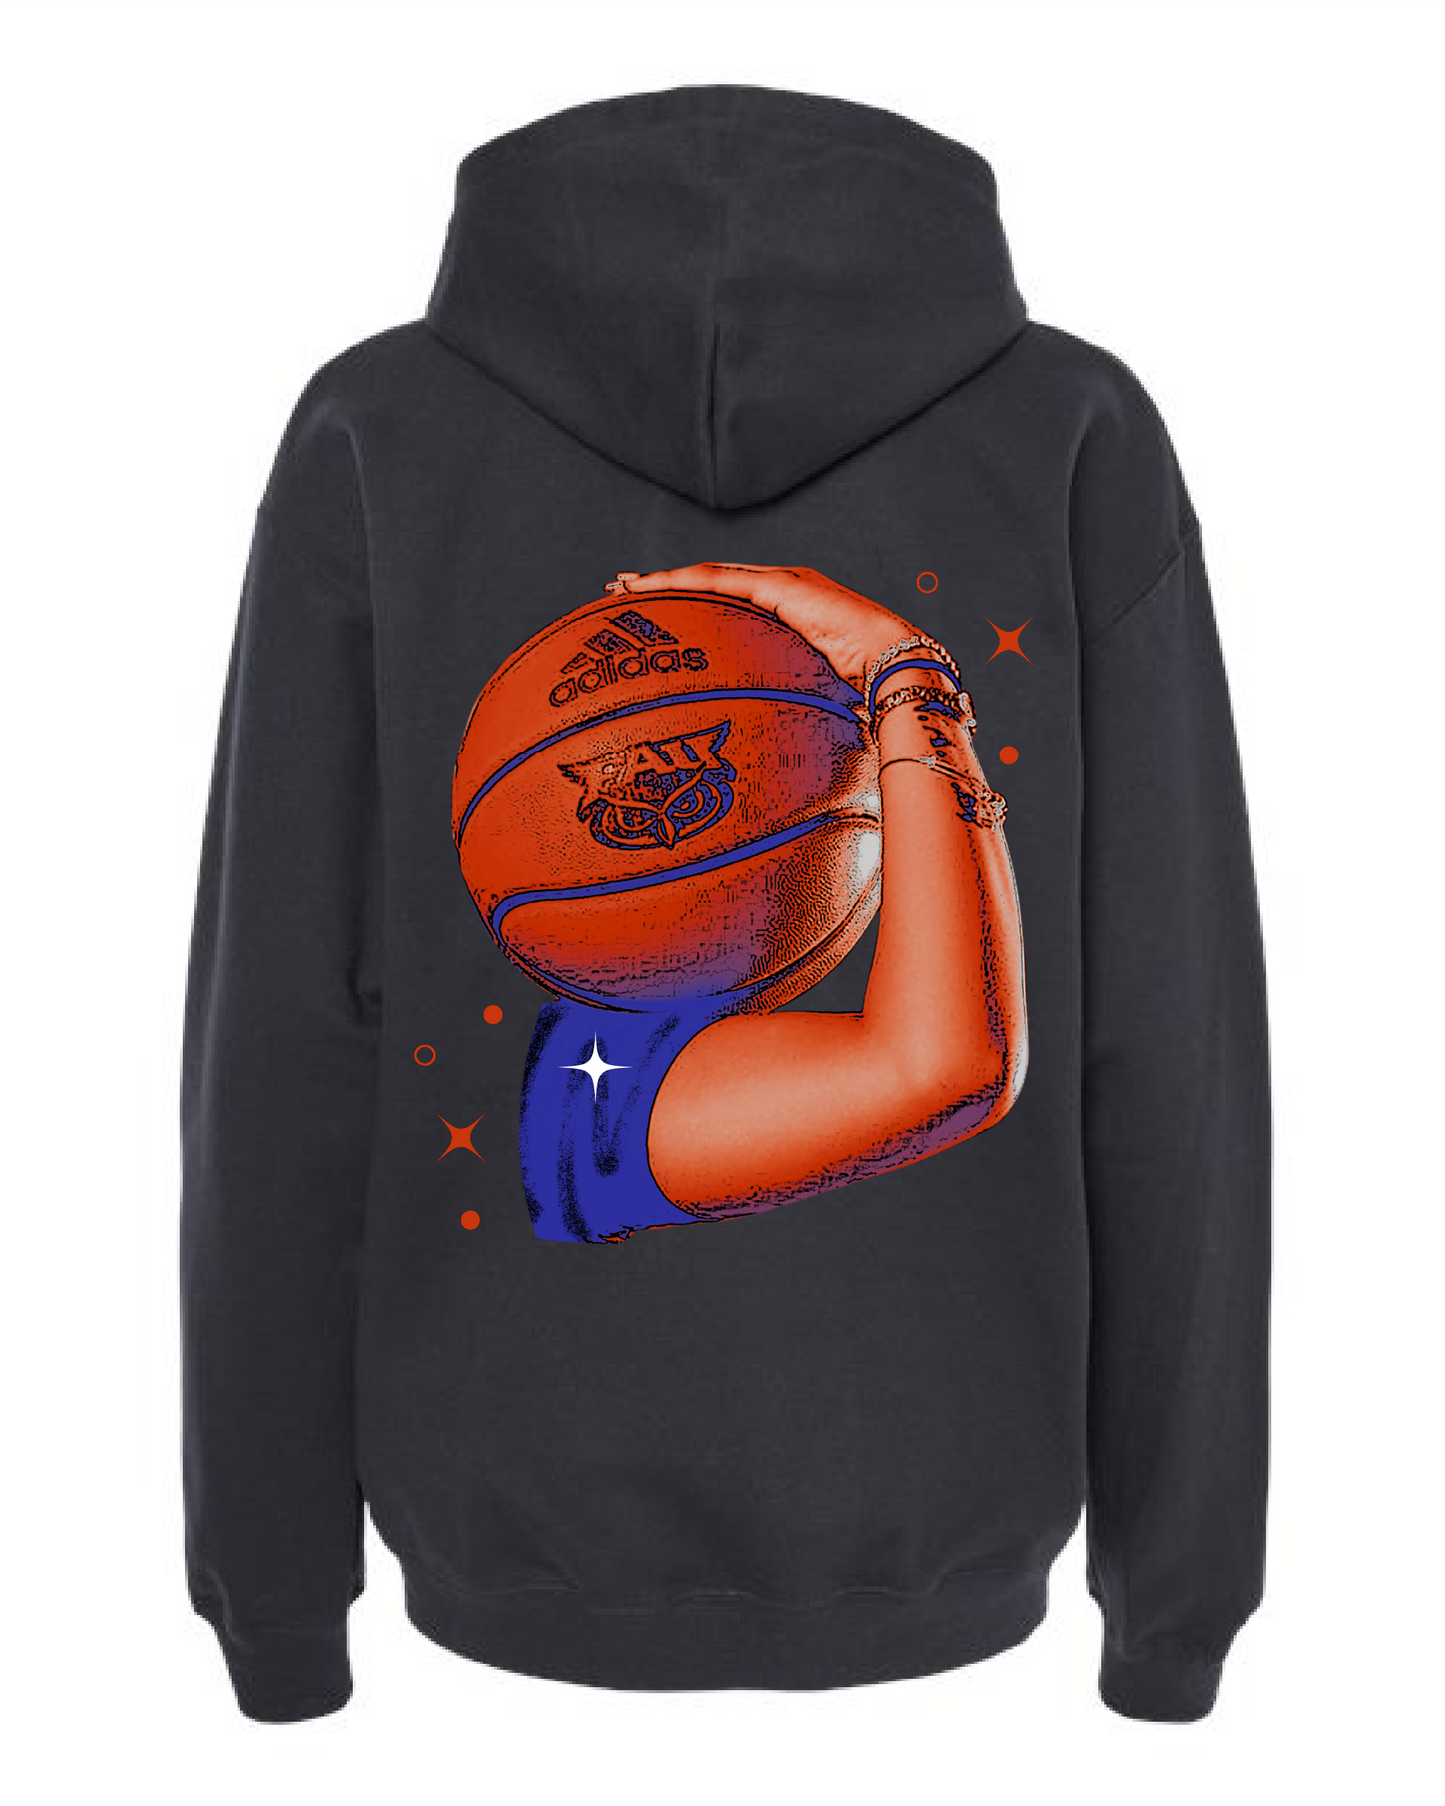 FAU Women's Basketball Sweatshirt